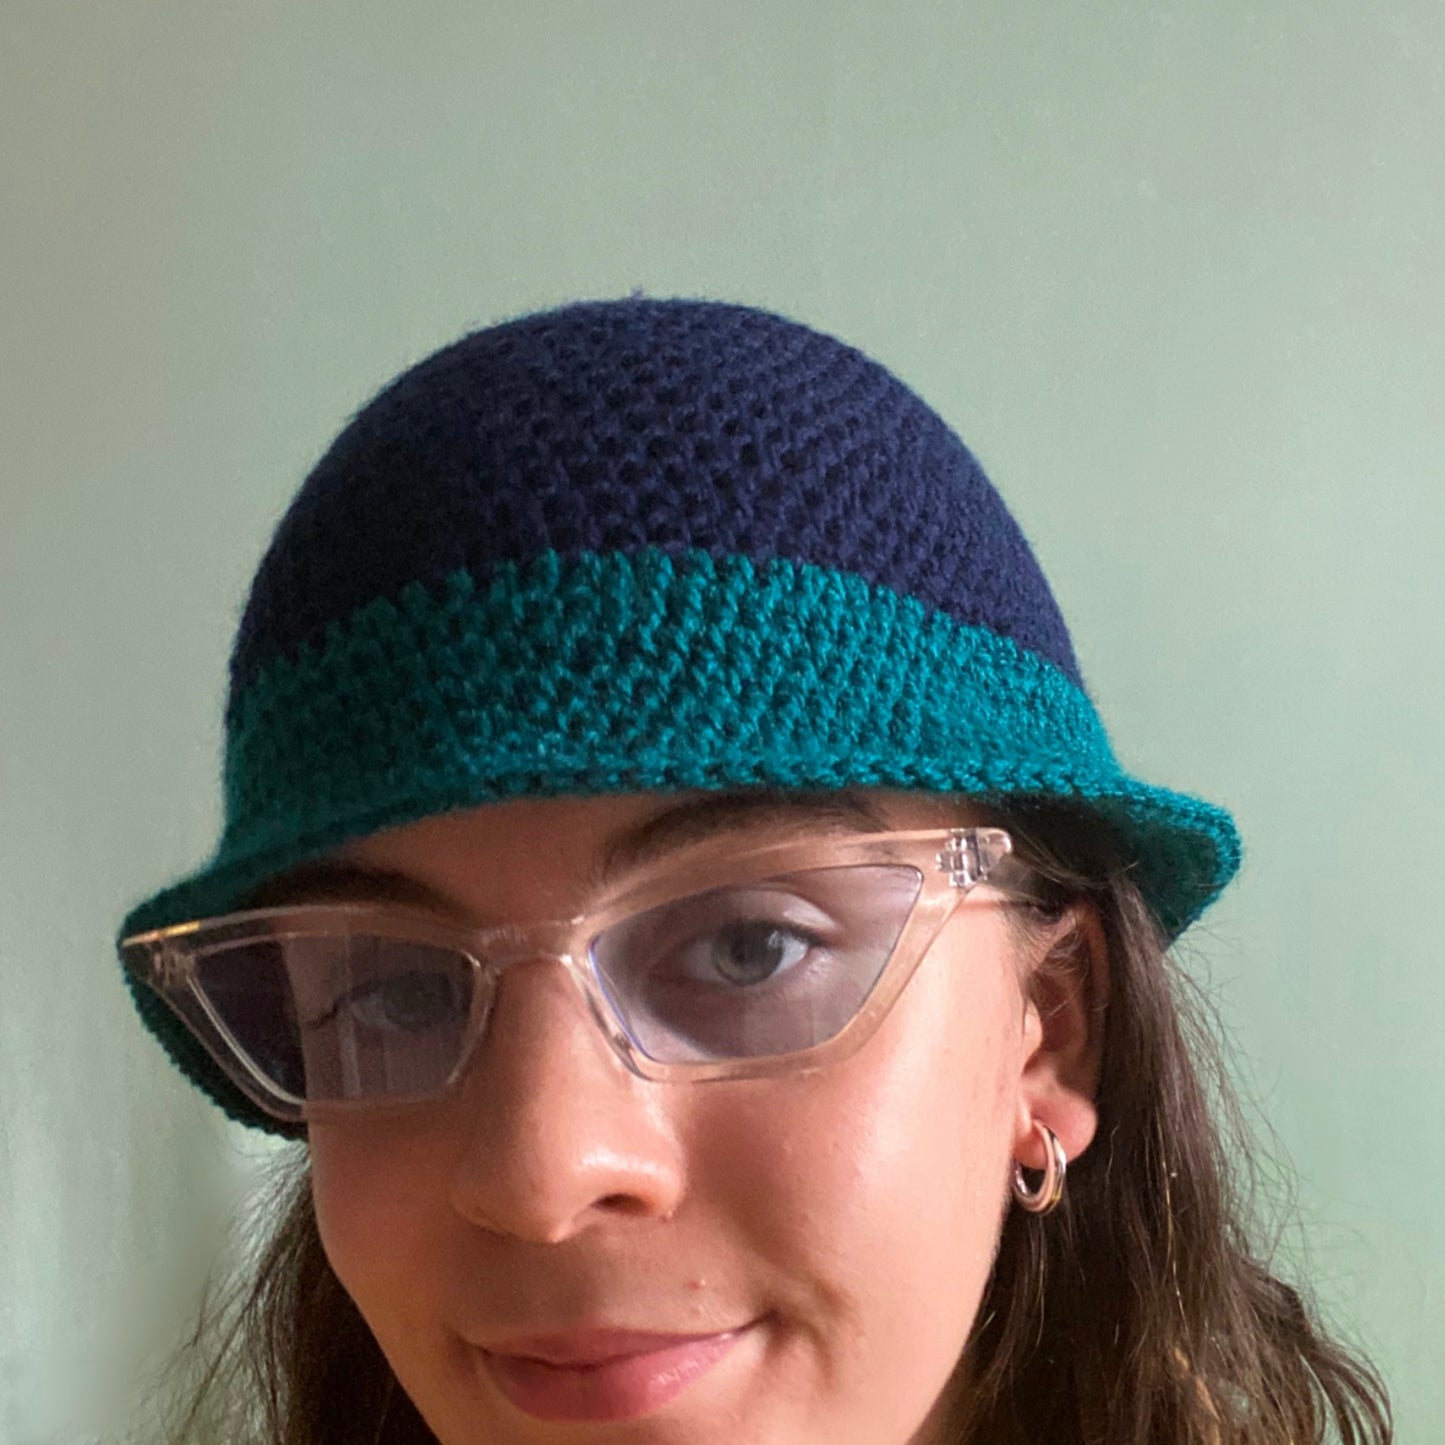 Handmade crochet colour block bucket hat in navy blue & teal